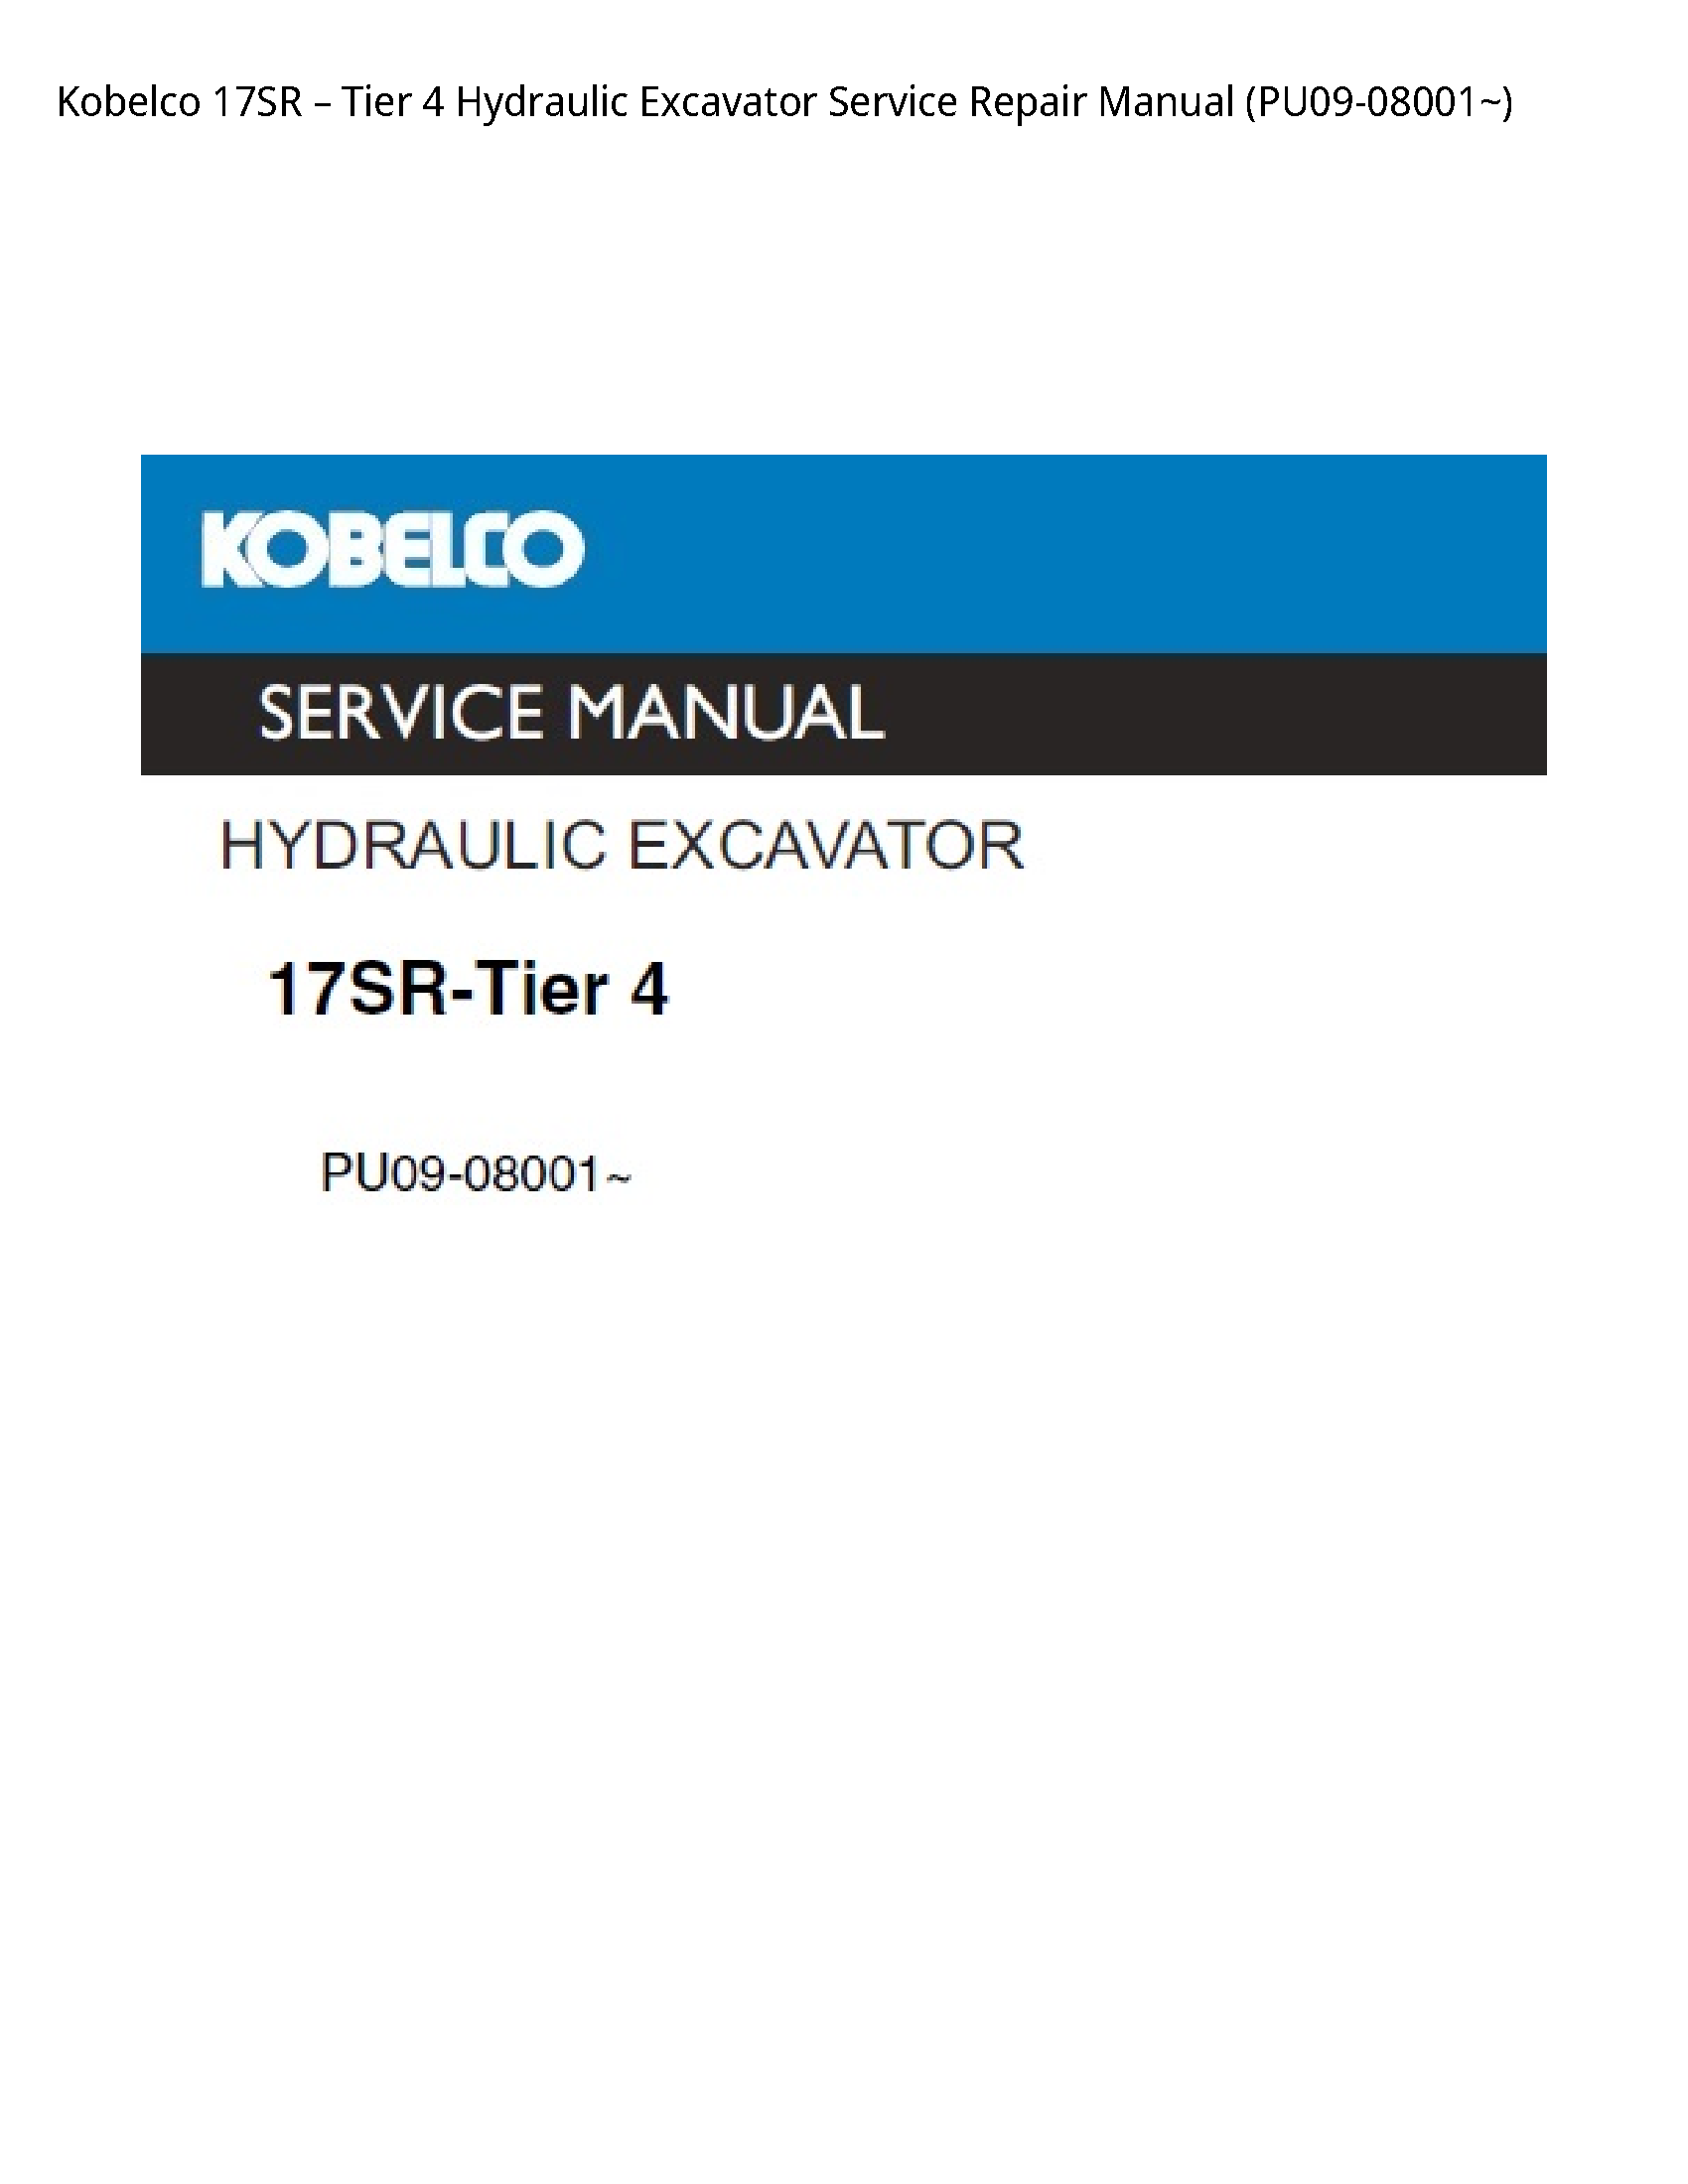 Kobelco 17SR Tier Hydraulic Excavator manual